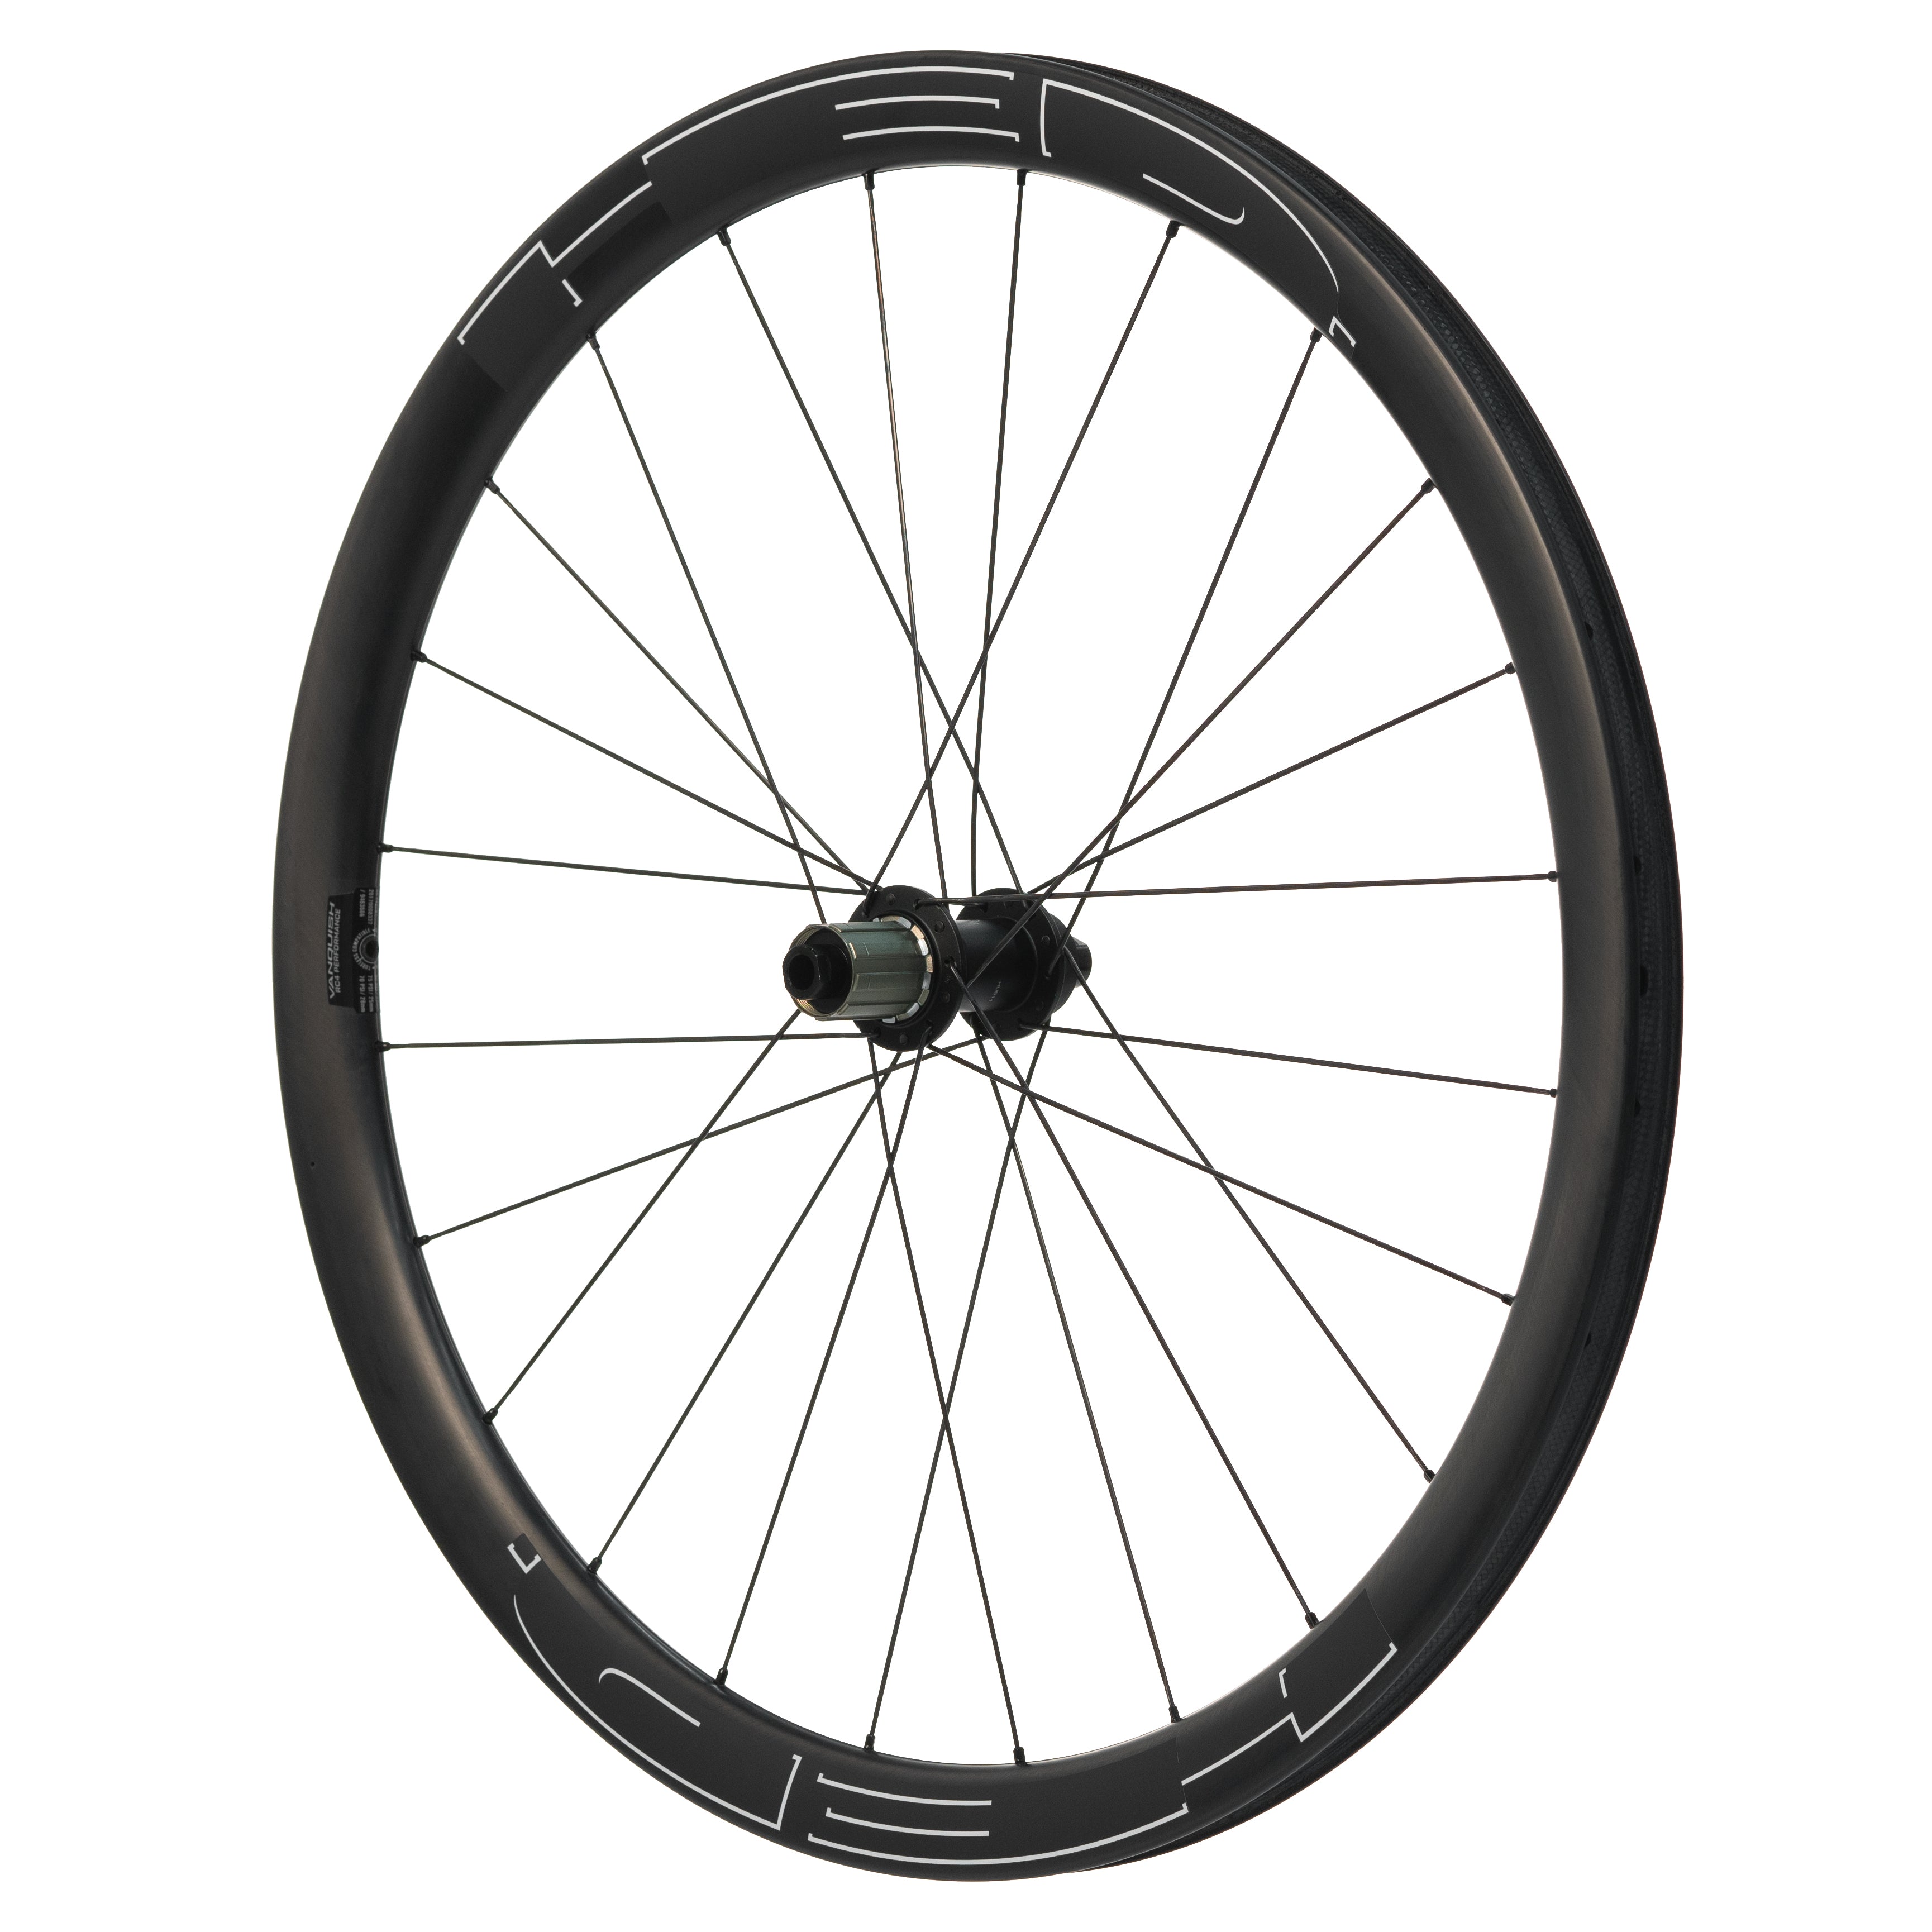 Vanquish RC Performance Wheel Series